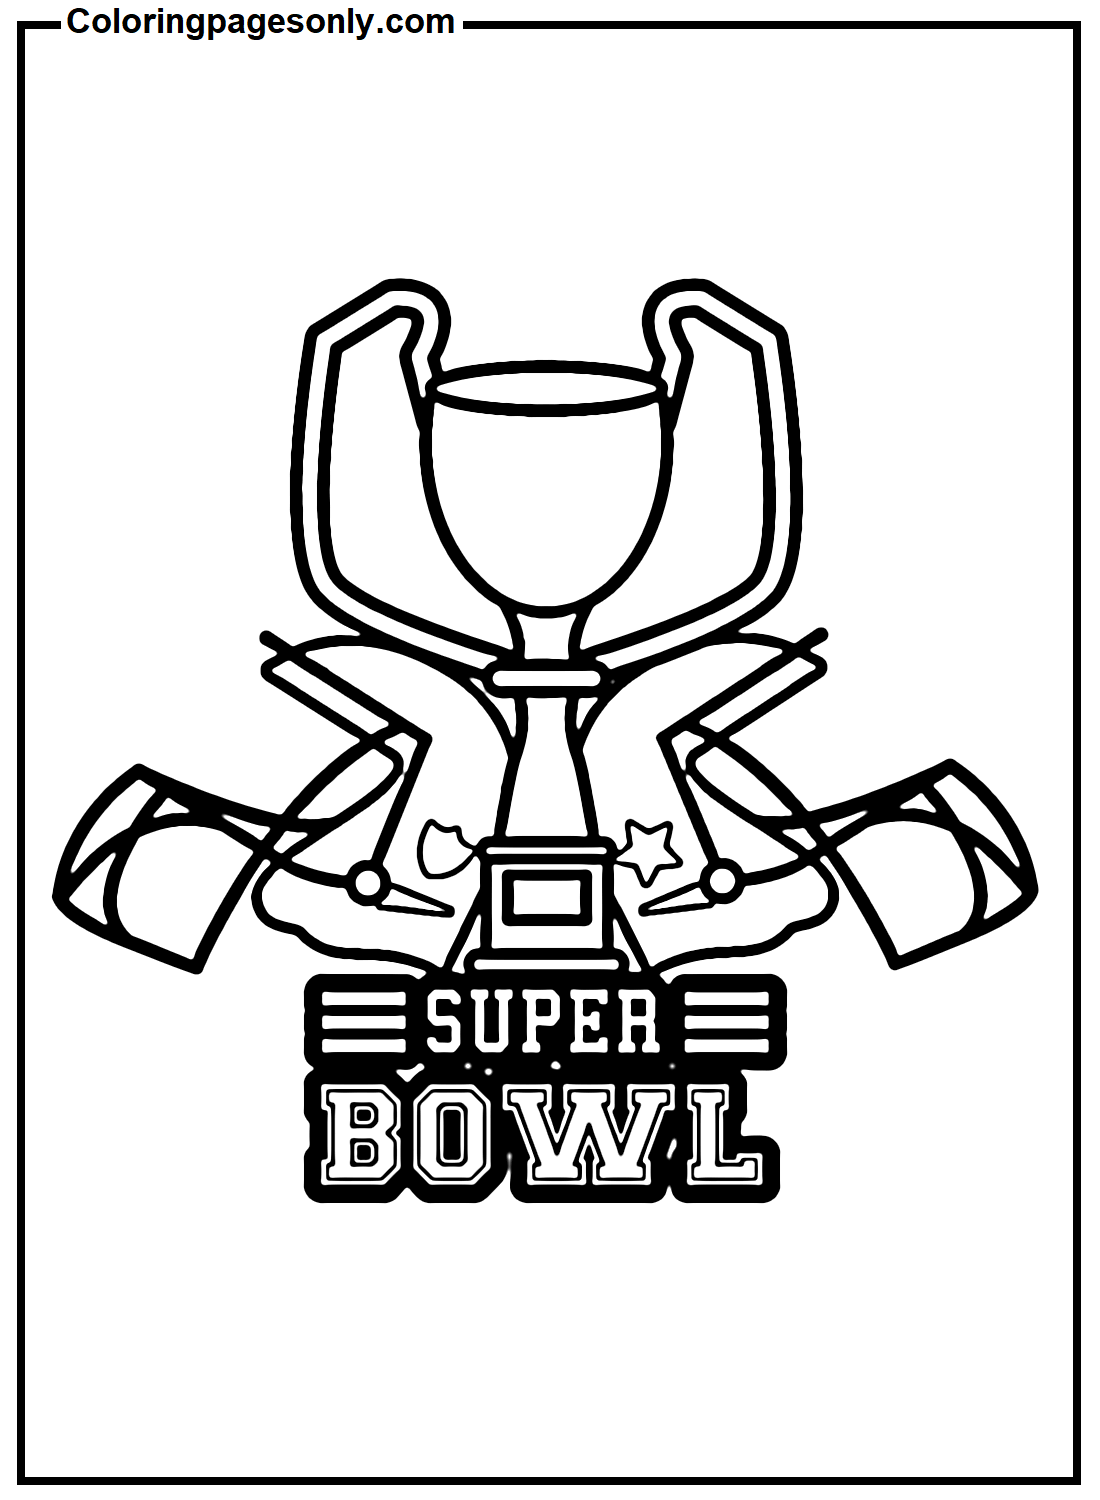 Super Bowl color Sheets Coloring Page